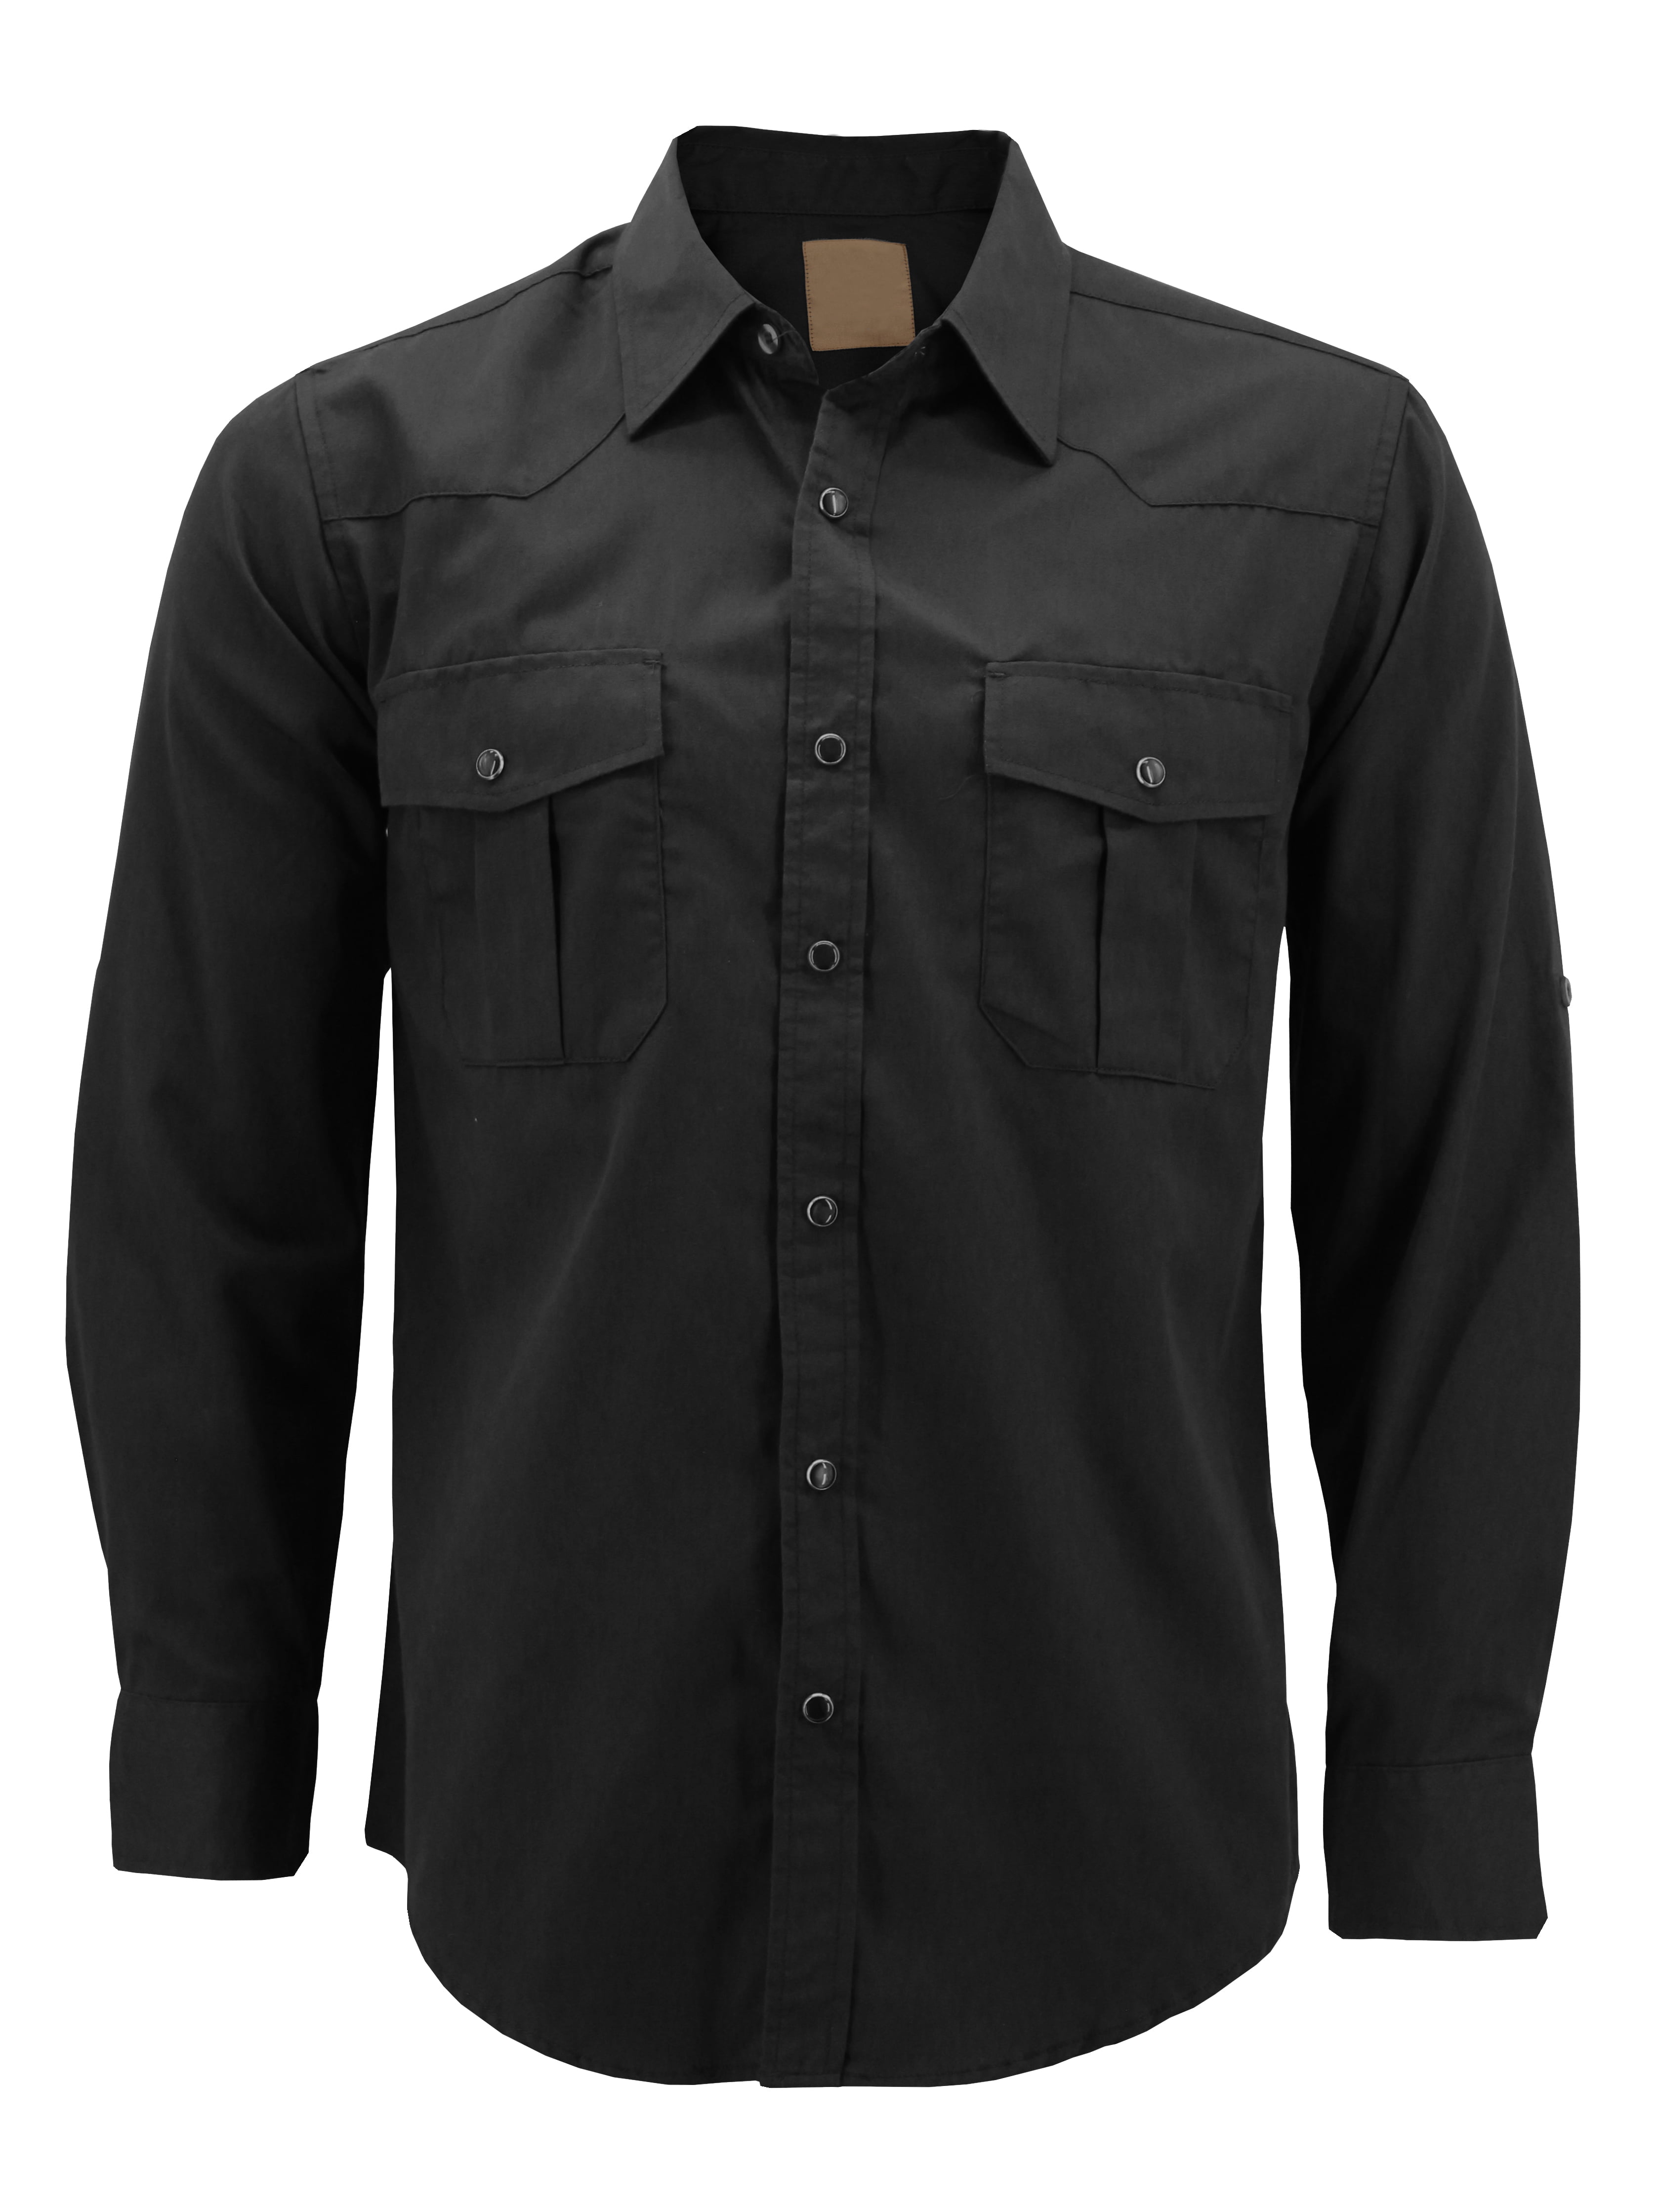 long sleeve black shirt